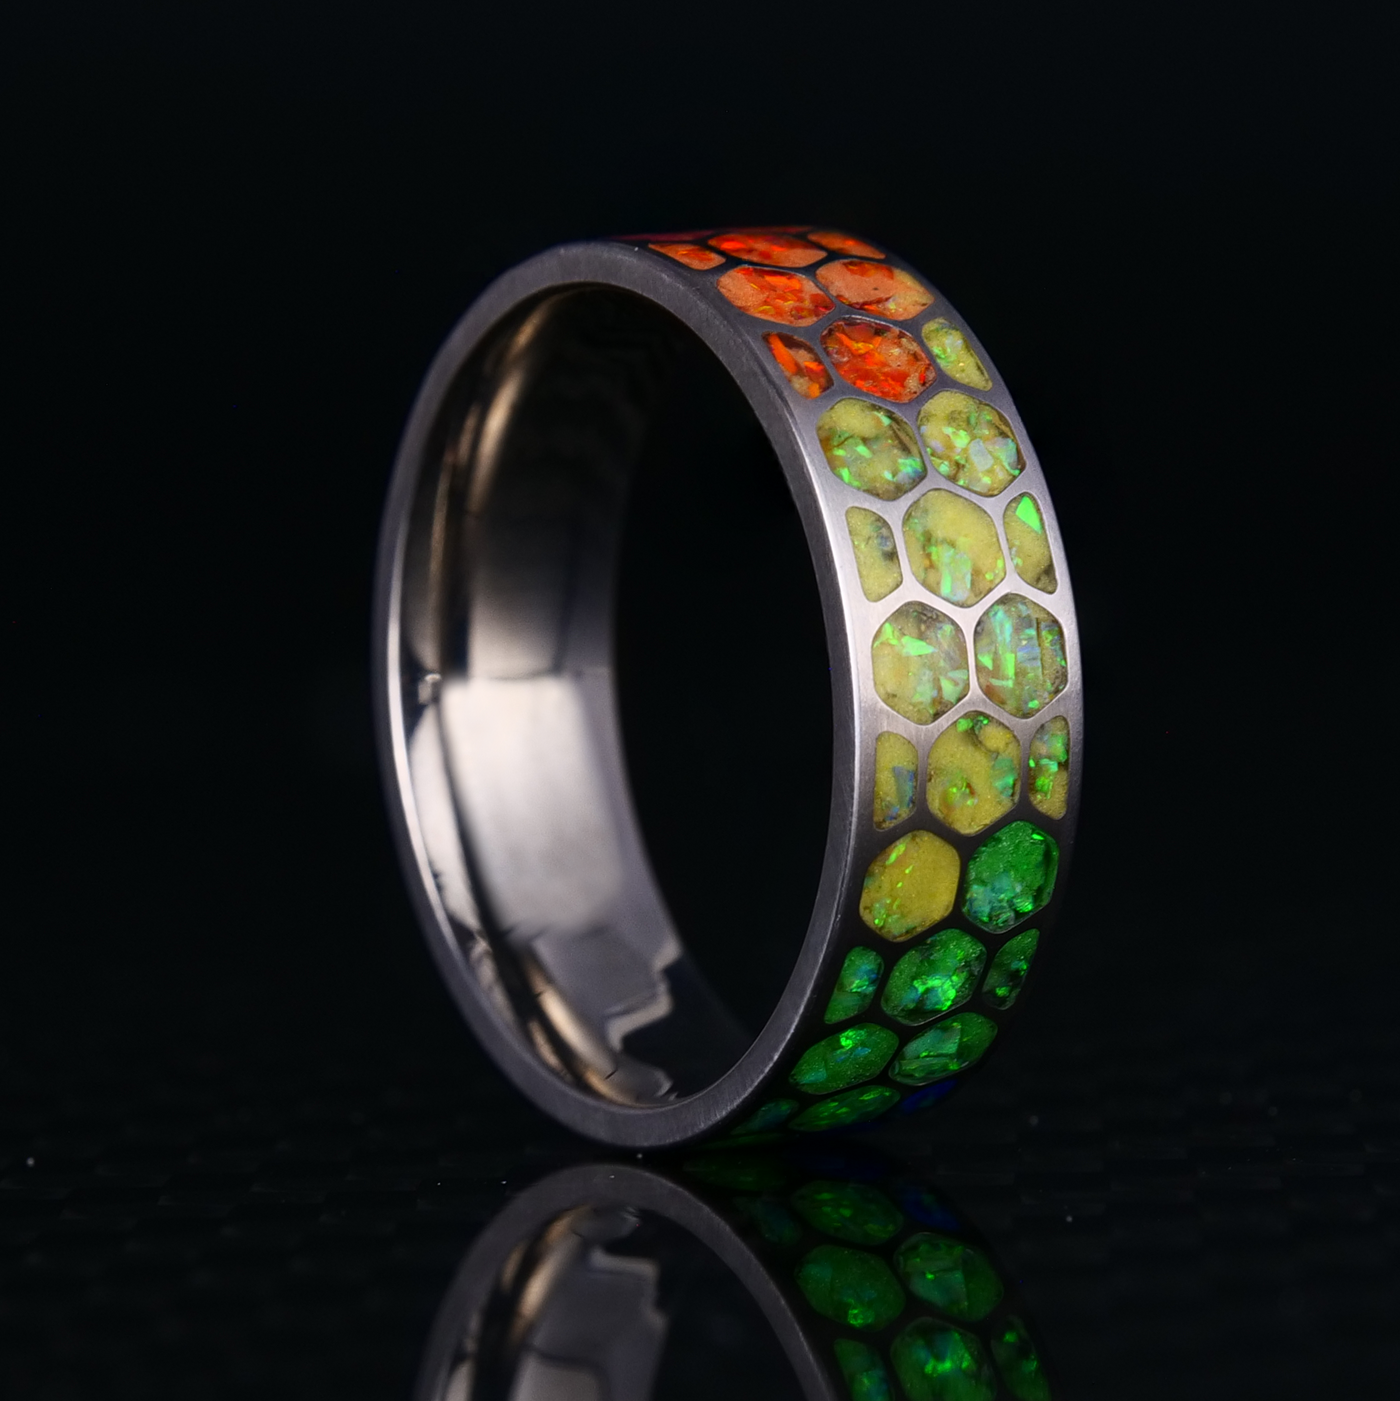 Hexagon Prismatic Opal Glowstone Ring on Titanium - Patrick Adair Designs